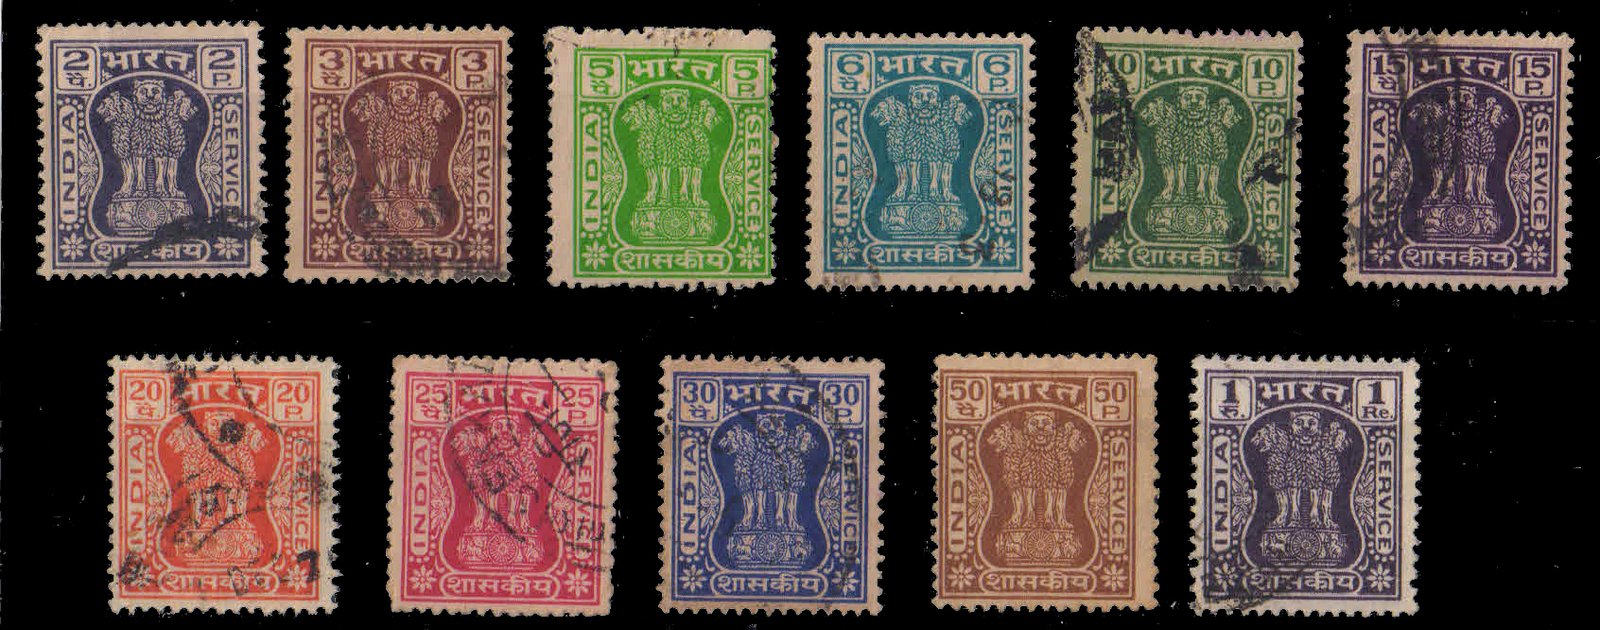 1967, (P) Series Set of 11 Stamps 